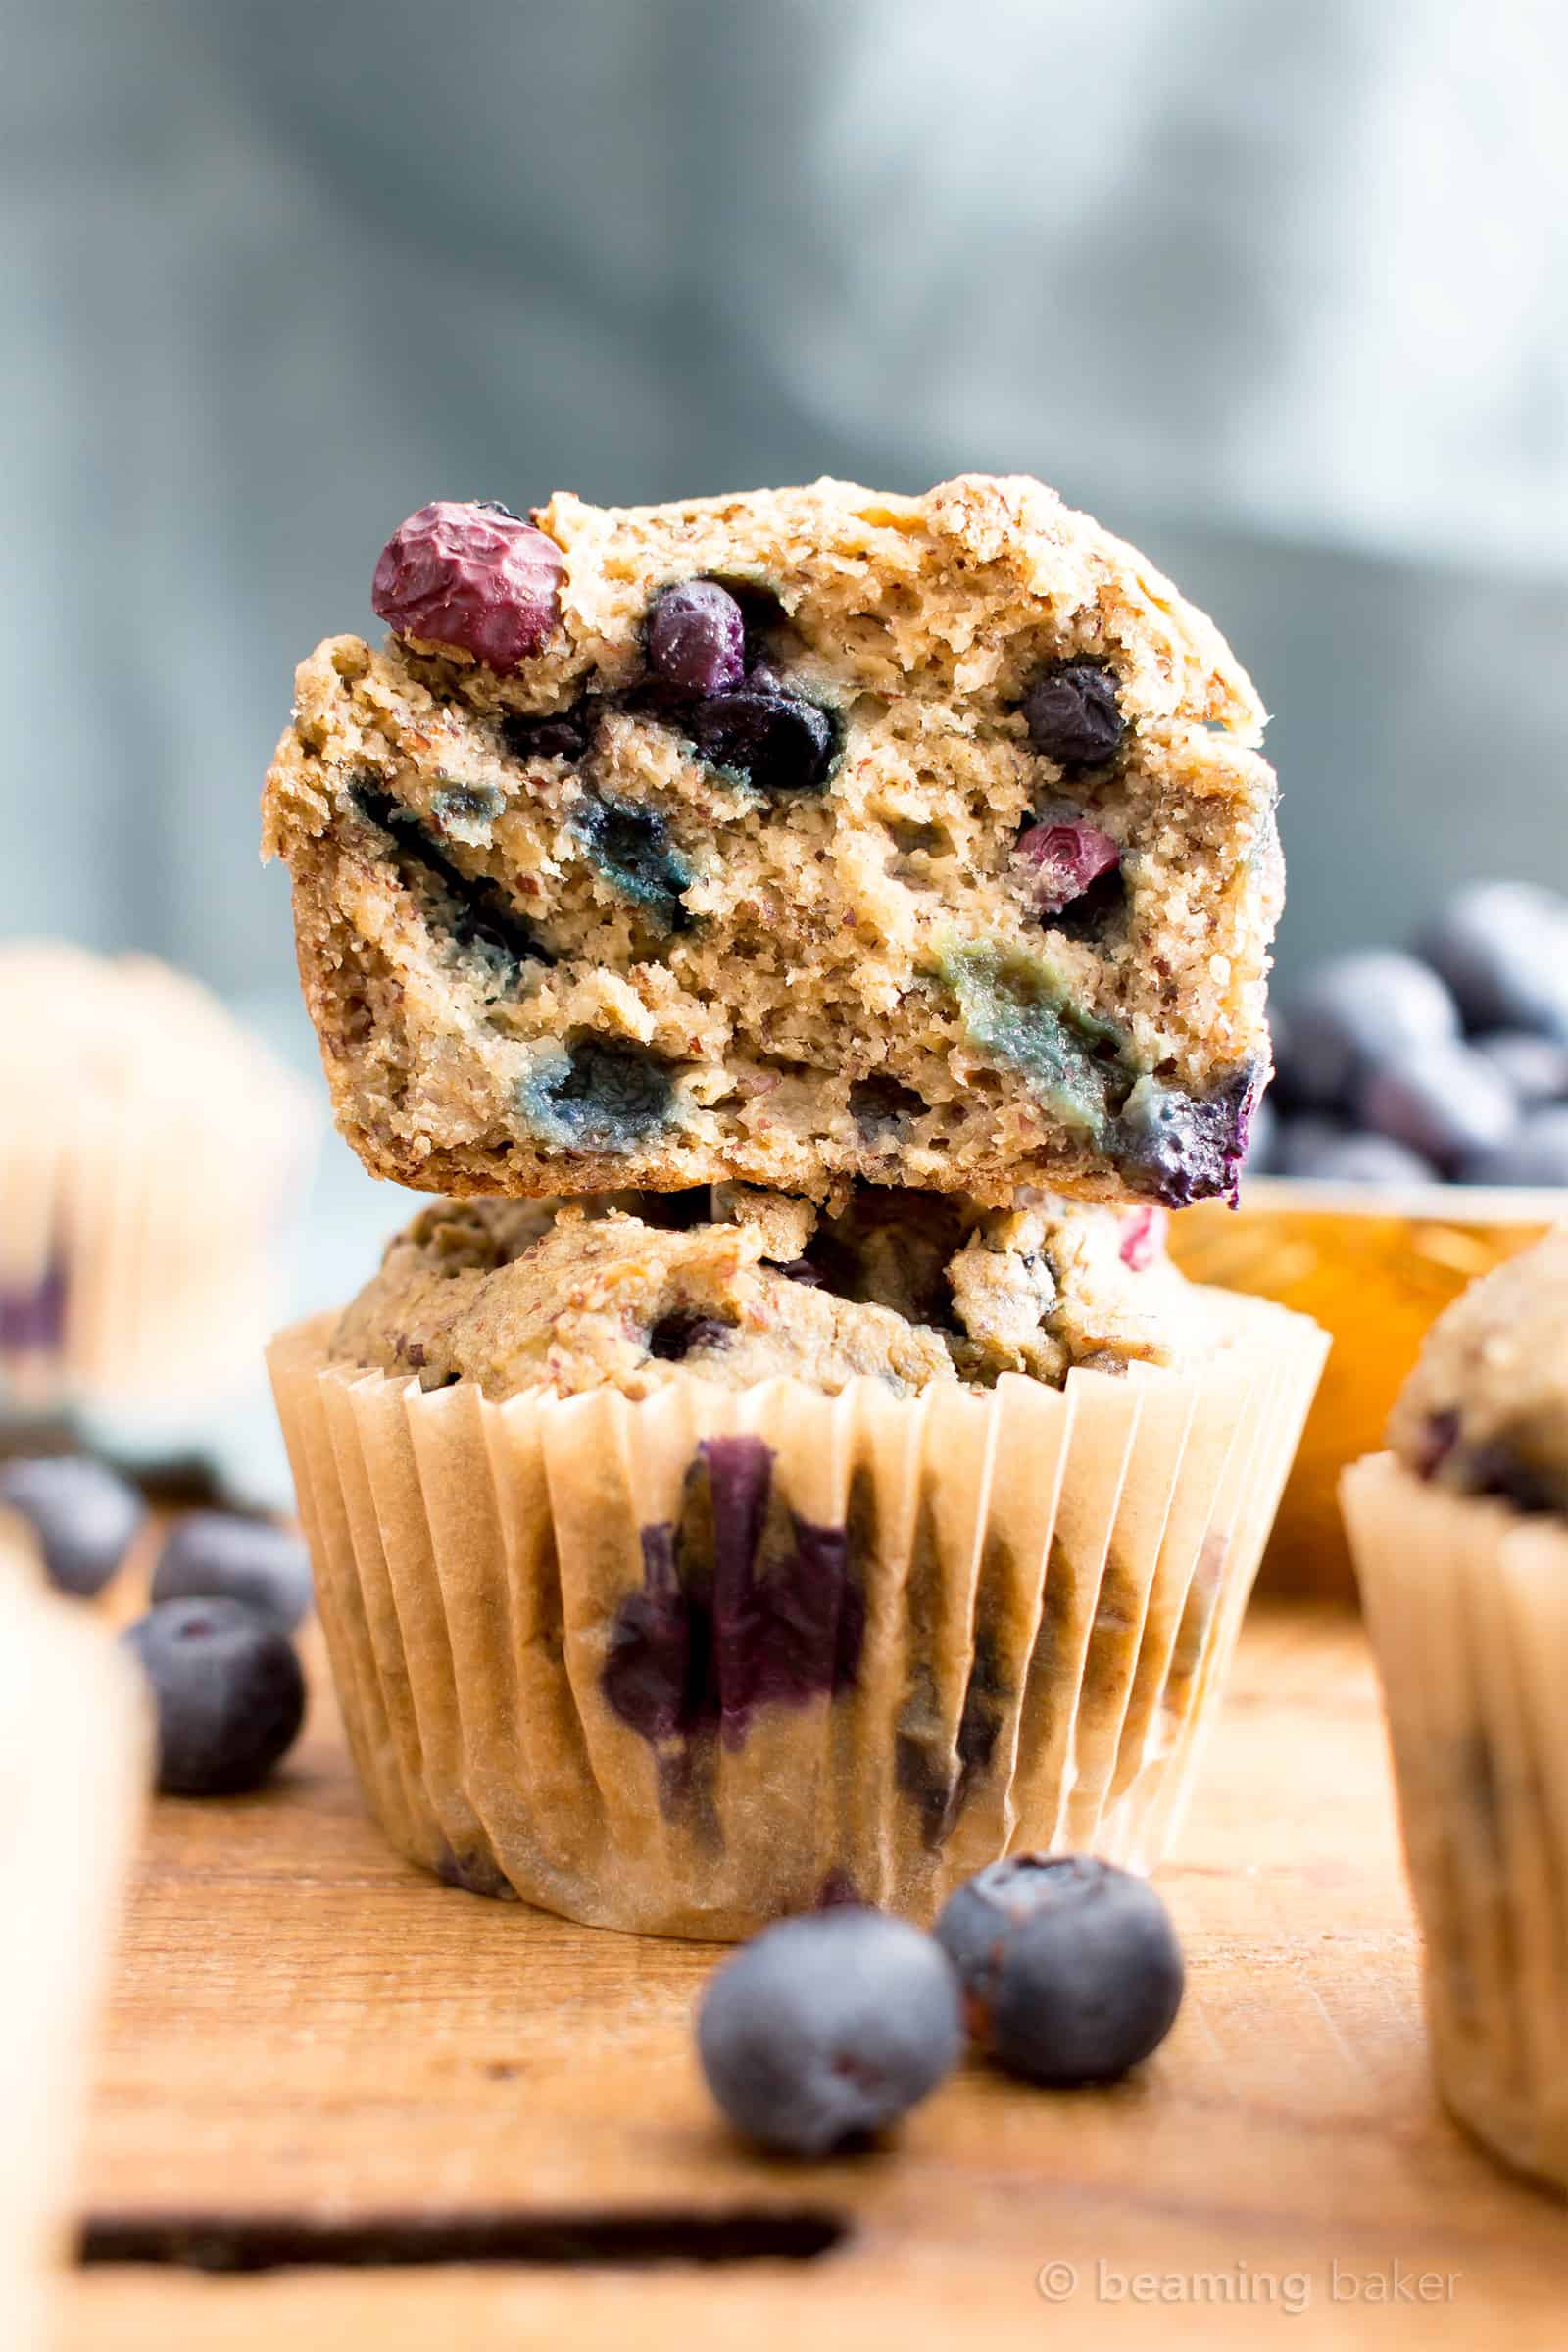 Healthy Banana Blueberry Muffins Recipe (V, GF): an easy recipe for moist banana muffins bursting with fresh blueberry flavor! #Vegan #GlutenFree #DairyFree #Breakfast #Healthy | Recipe on BeamingBaker.com